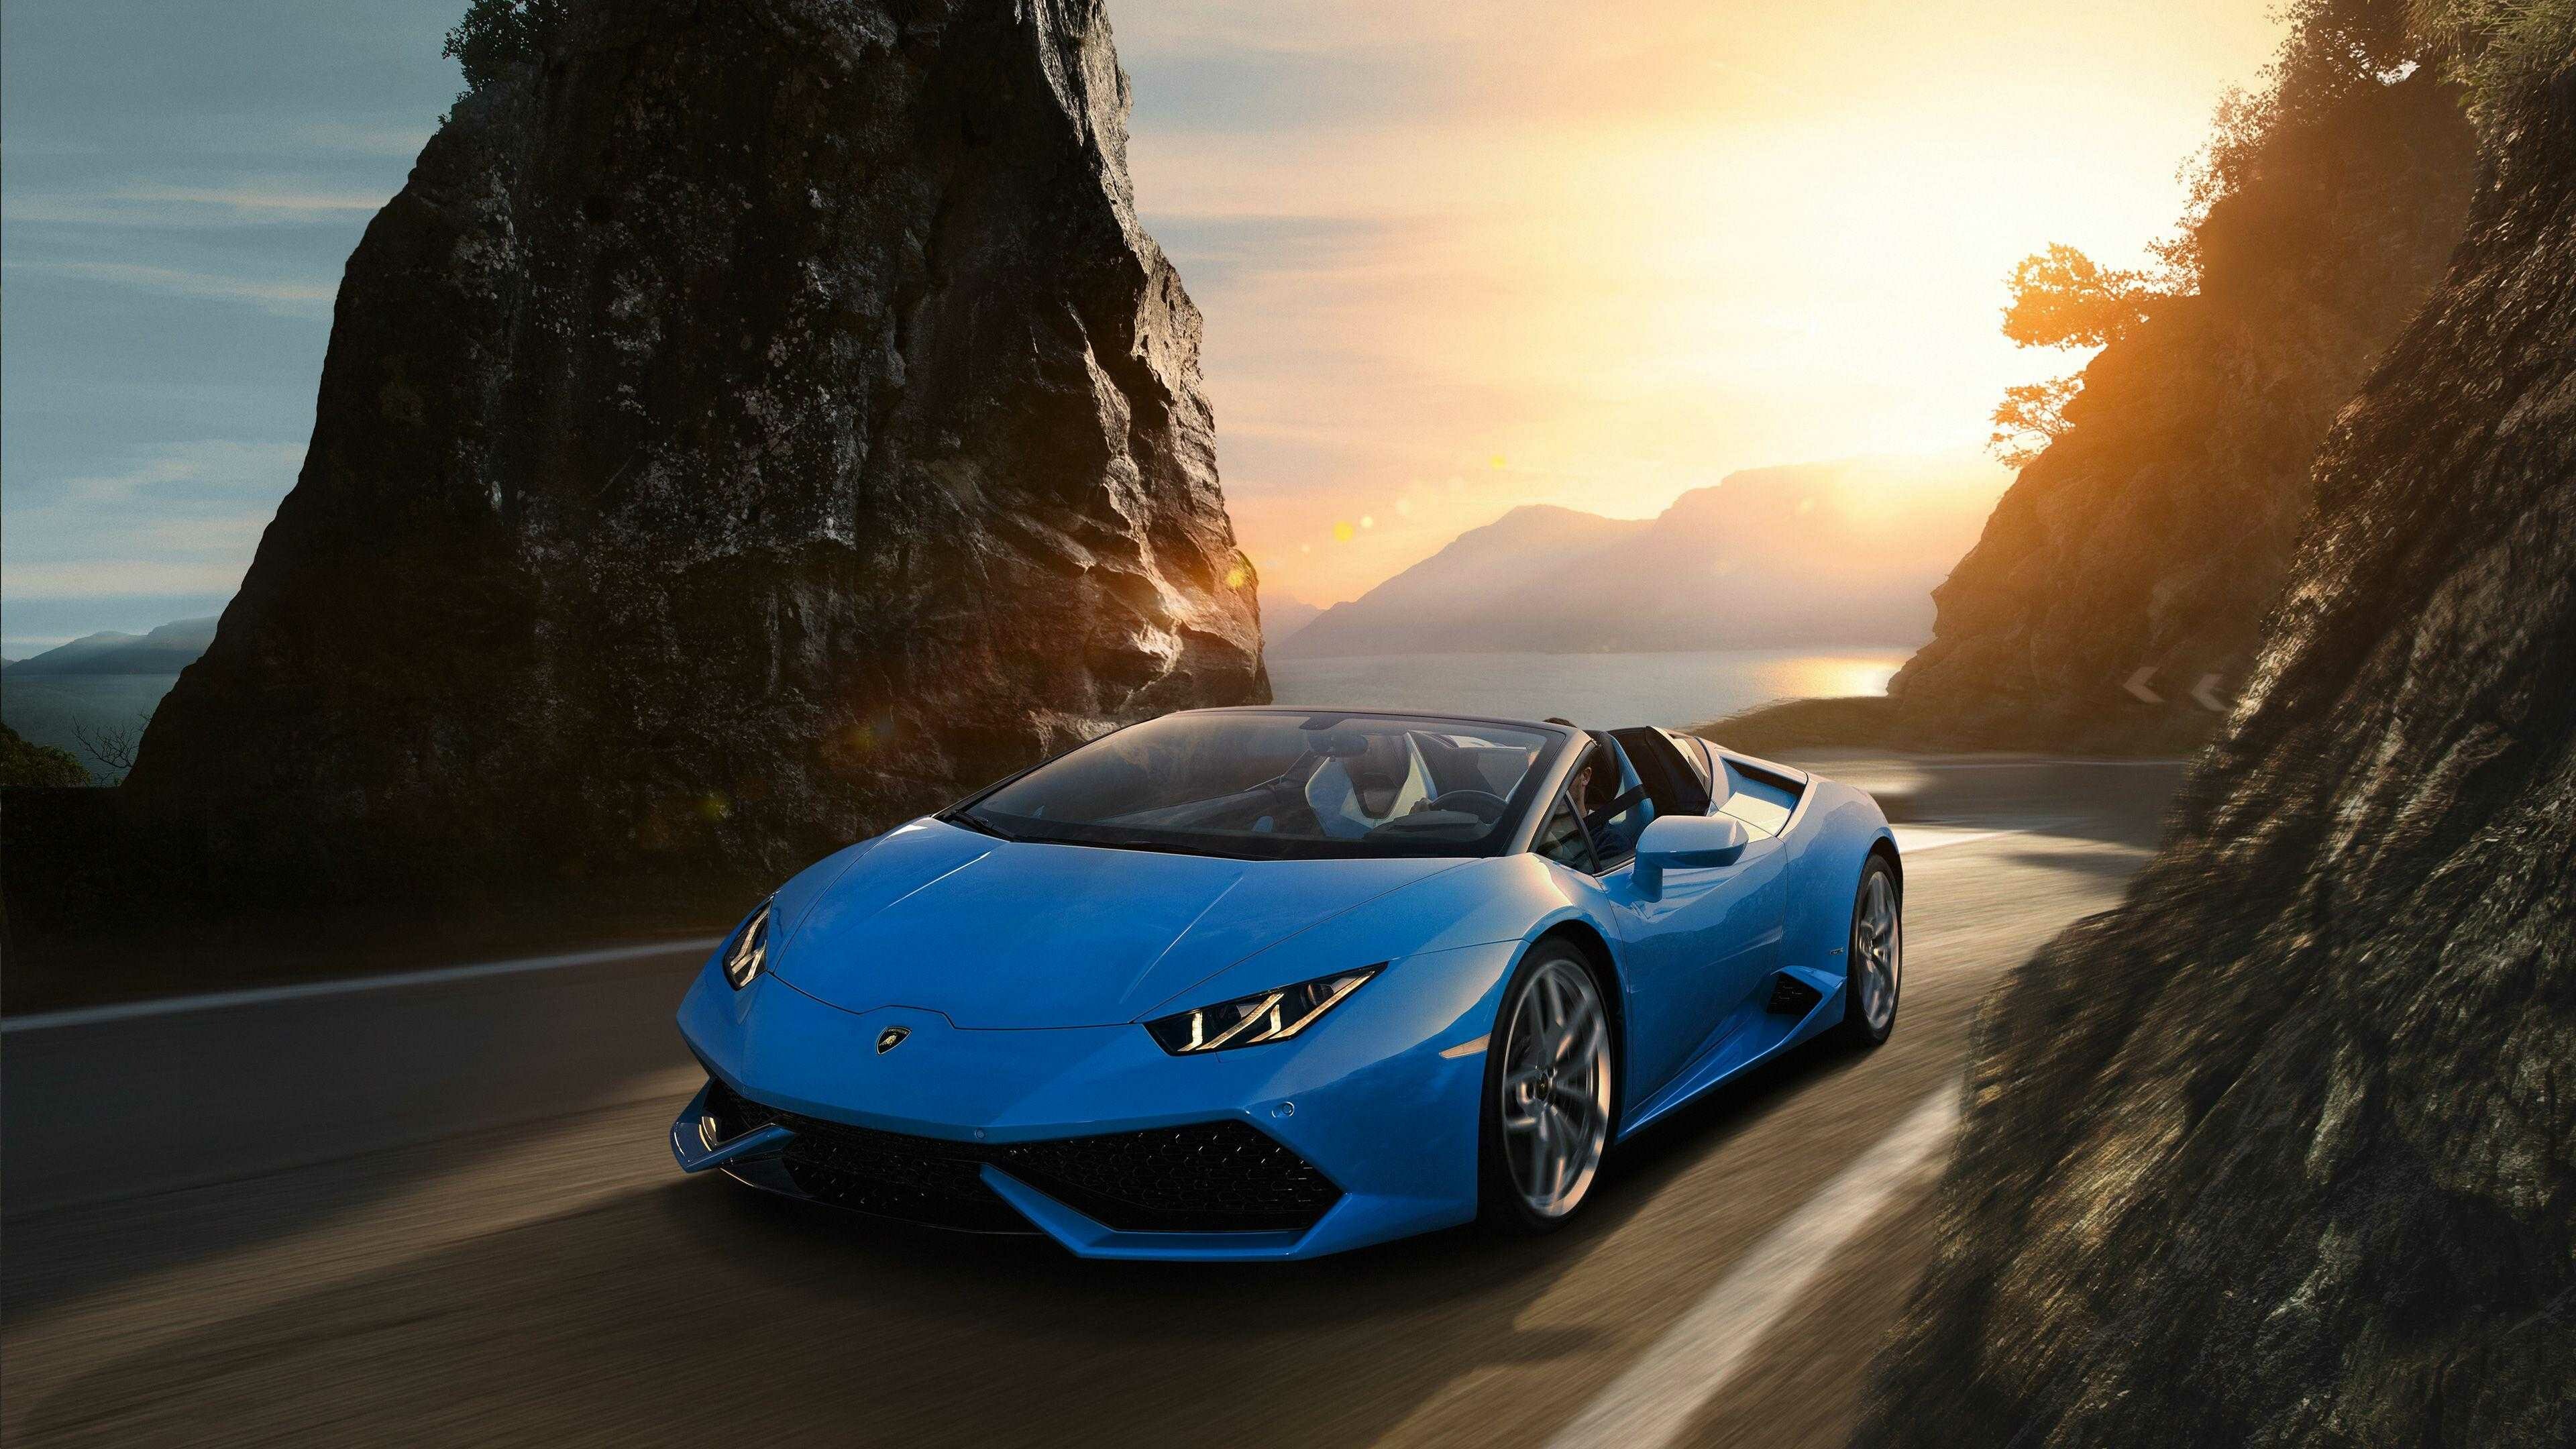 Lamborghini: An Italian car manufacturer based in Sant'Agata Bolognese, Huracan. 3840x2160 4K Wallpaper.